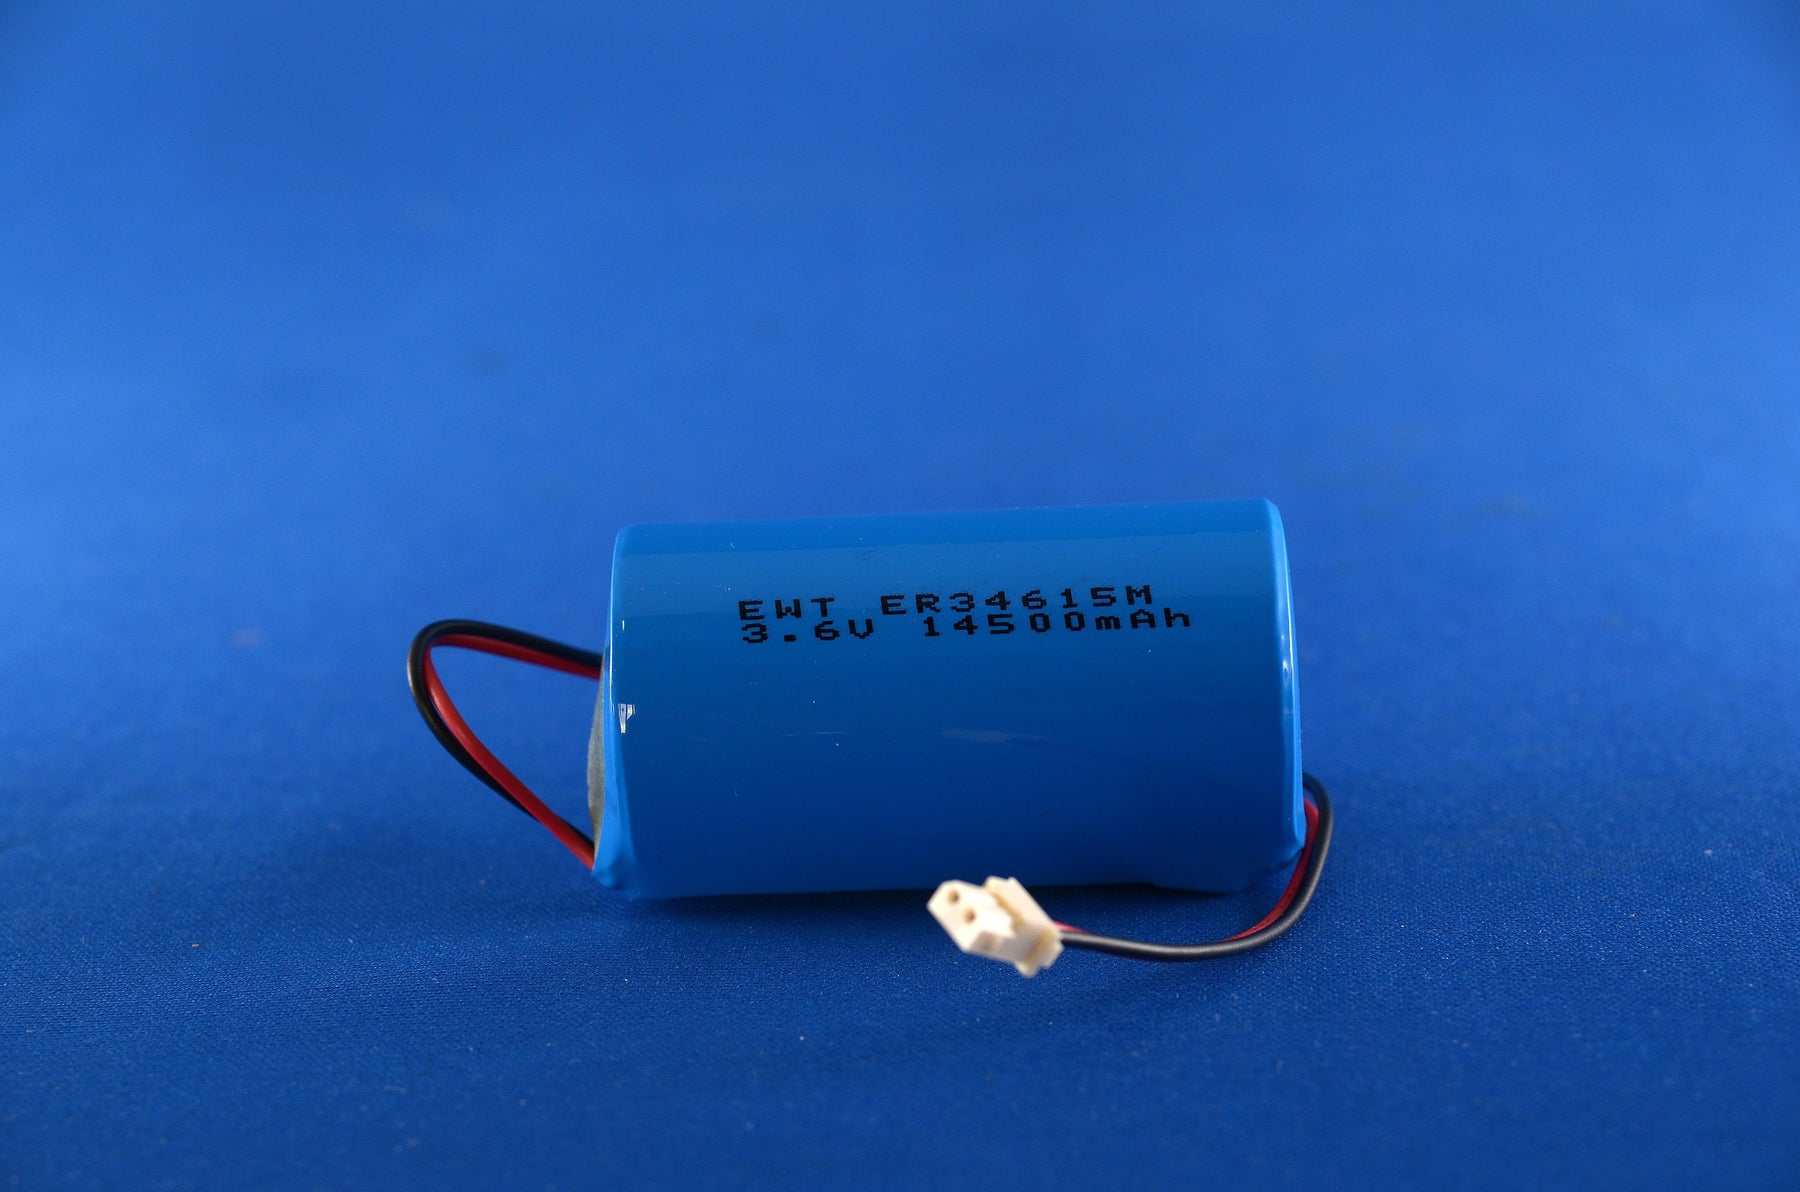 CR34615M Battery, 3.6 V, D, Lithium Thionyl Chloride from the Batteryworldshop.com